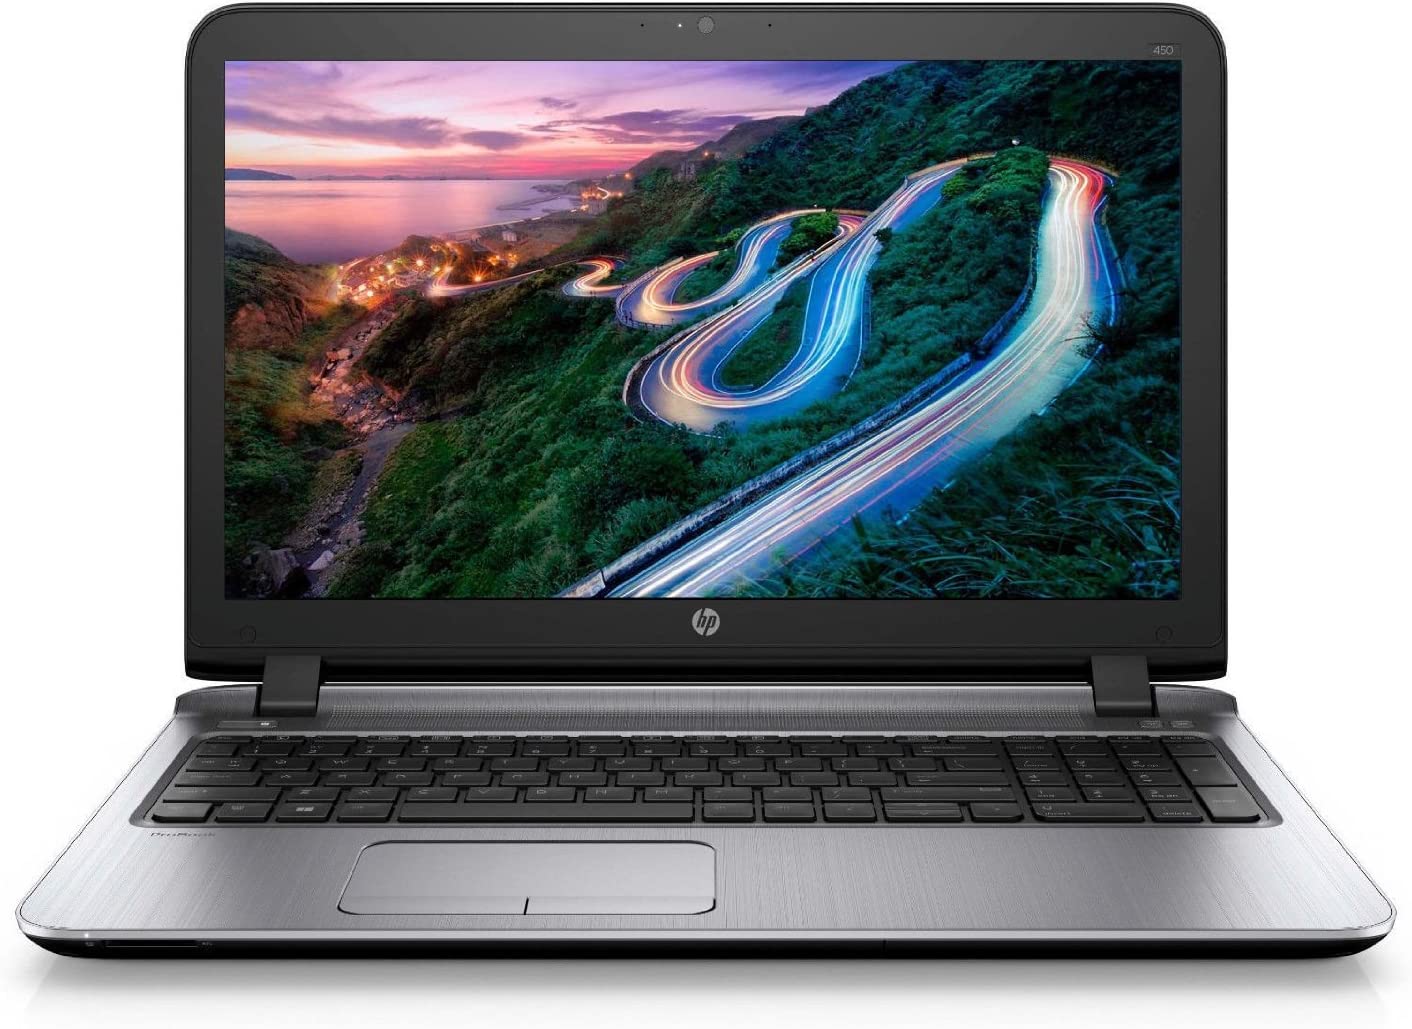 HP Probook 450 G2 Core i5-4200M 2.50 GHZ , 17.3 inches hd display windows 10 Pro (Renewed)